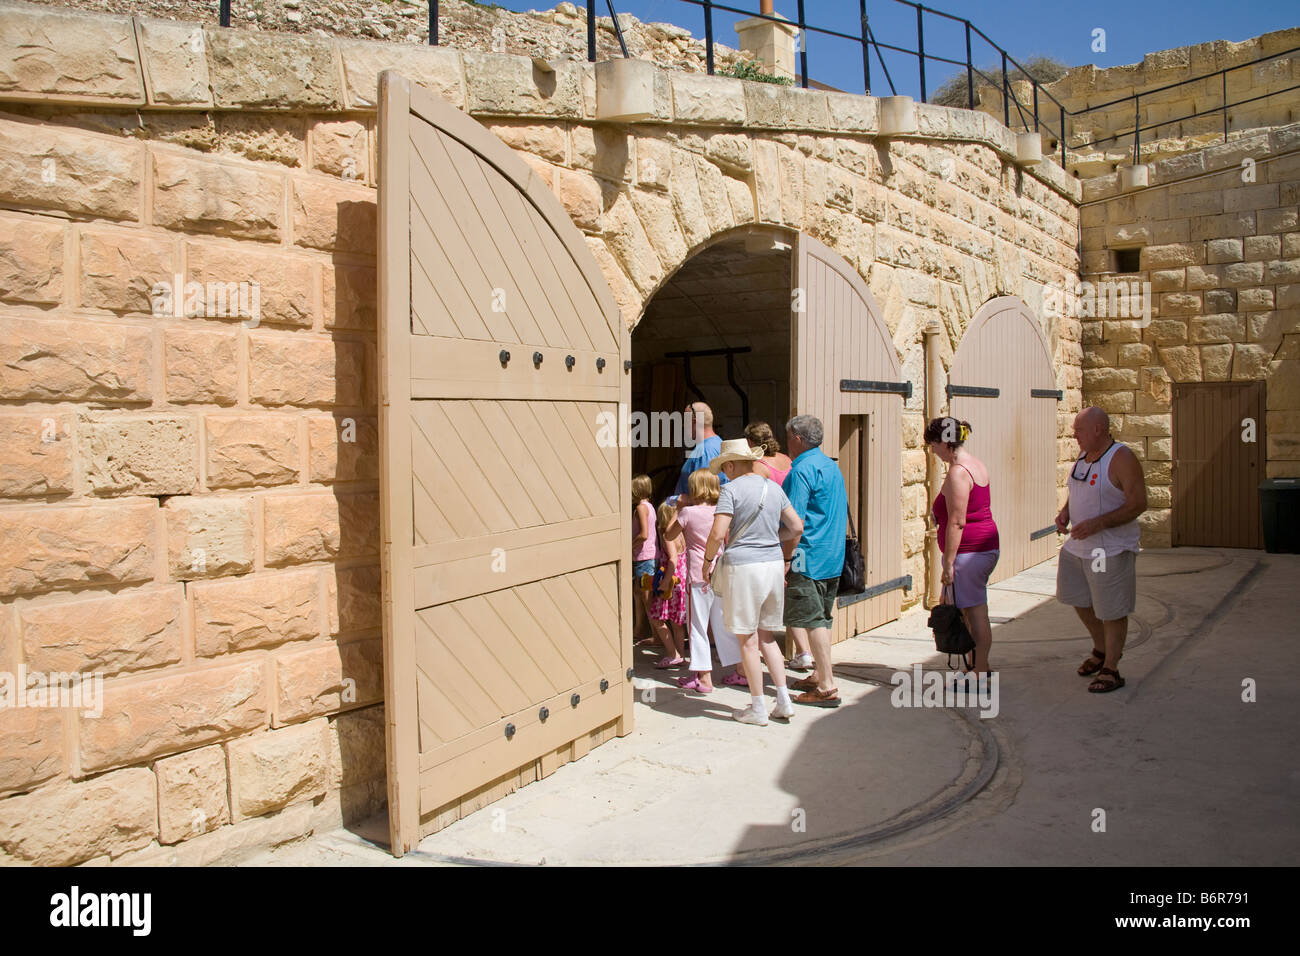 Tourists entering a building at Fort Rinella, Fort Rinella, Kalkara, Malta Stock Photo